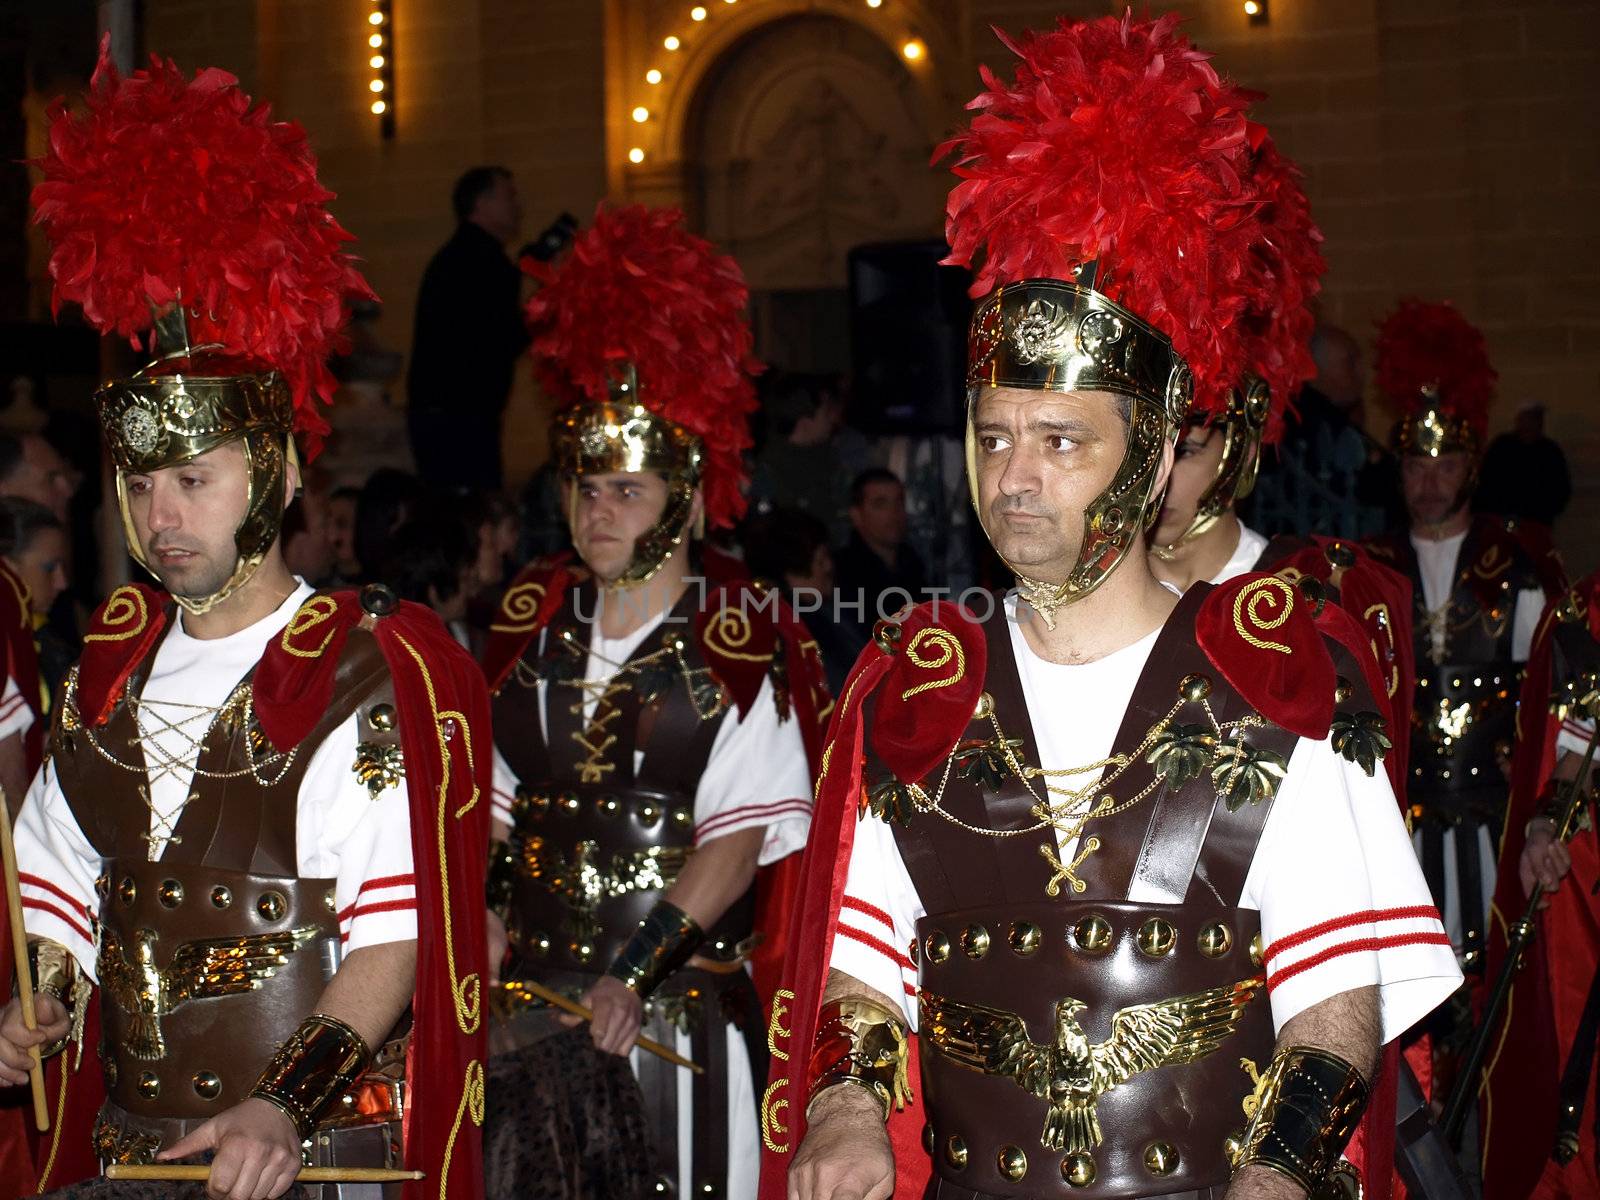 Roman Battalion by PhotoWorks